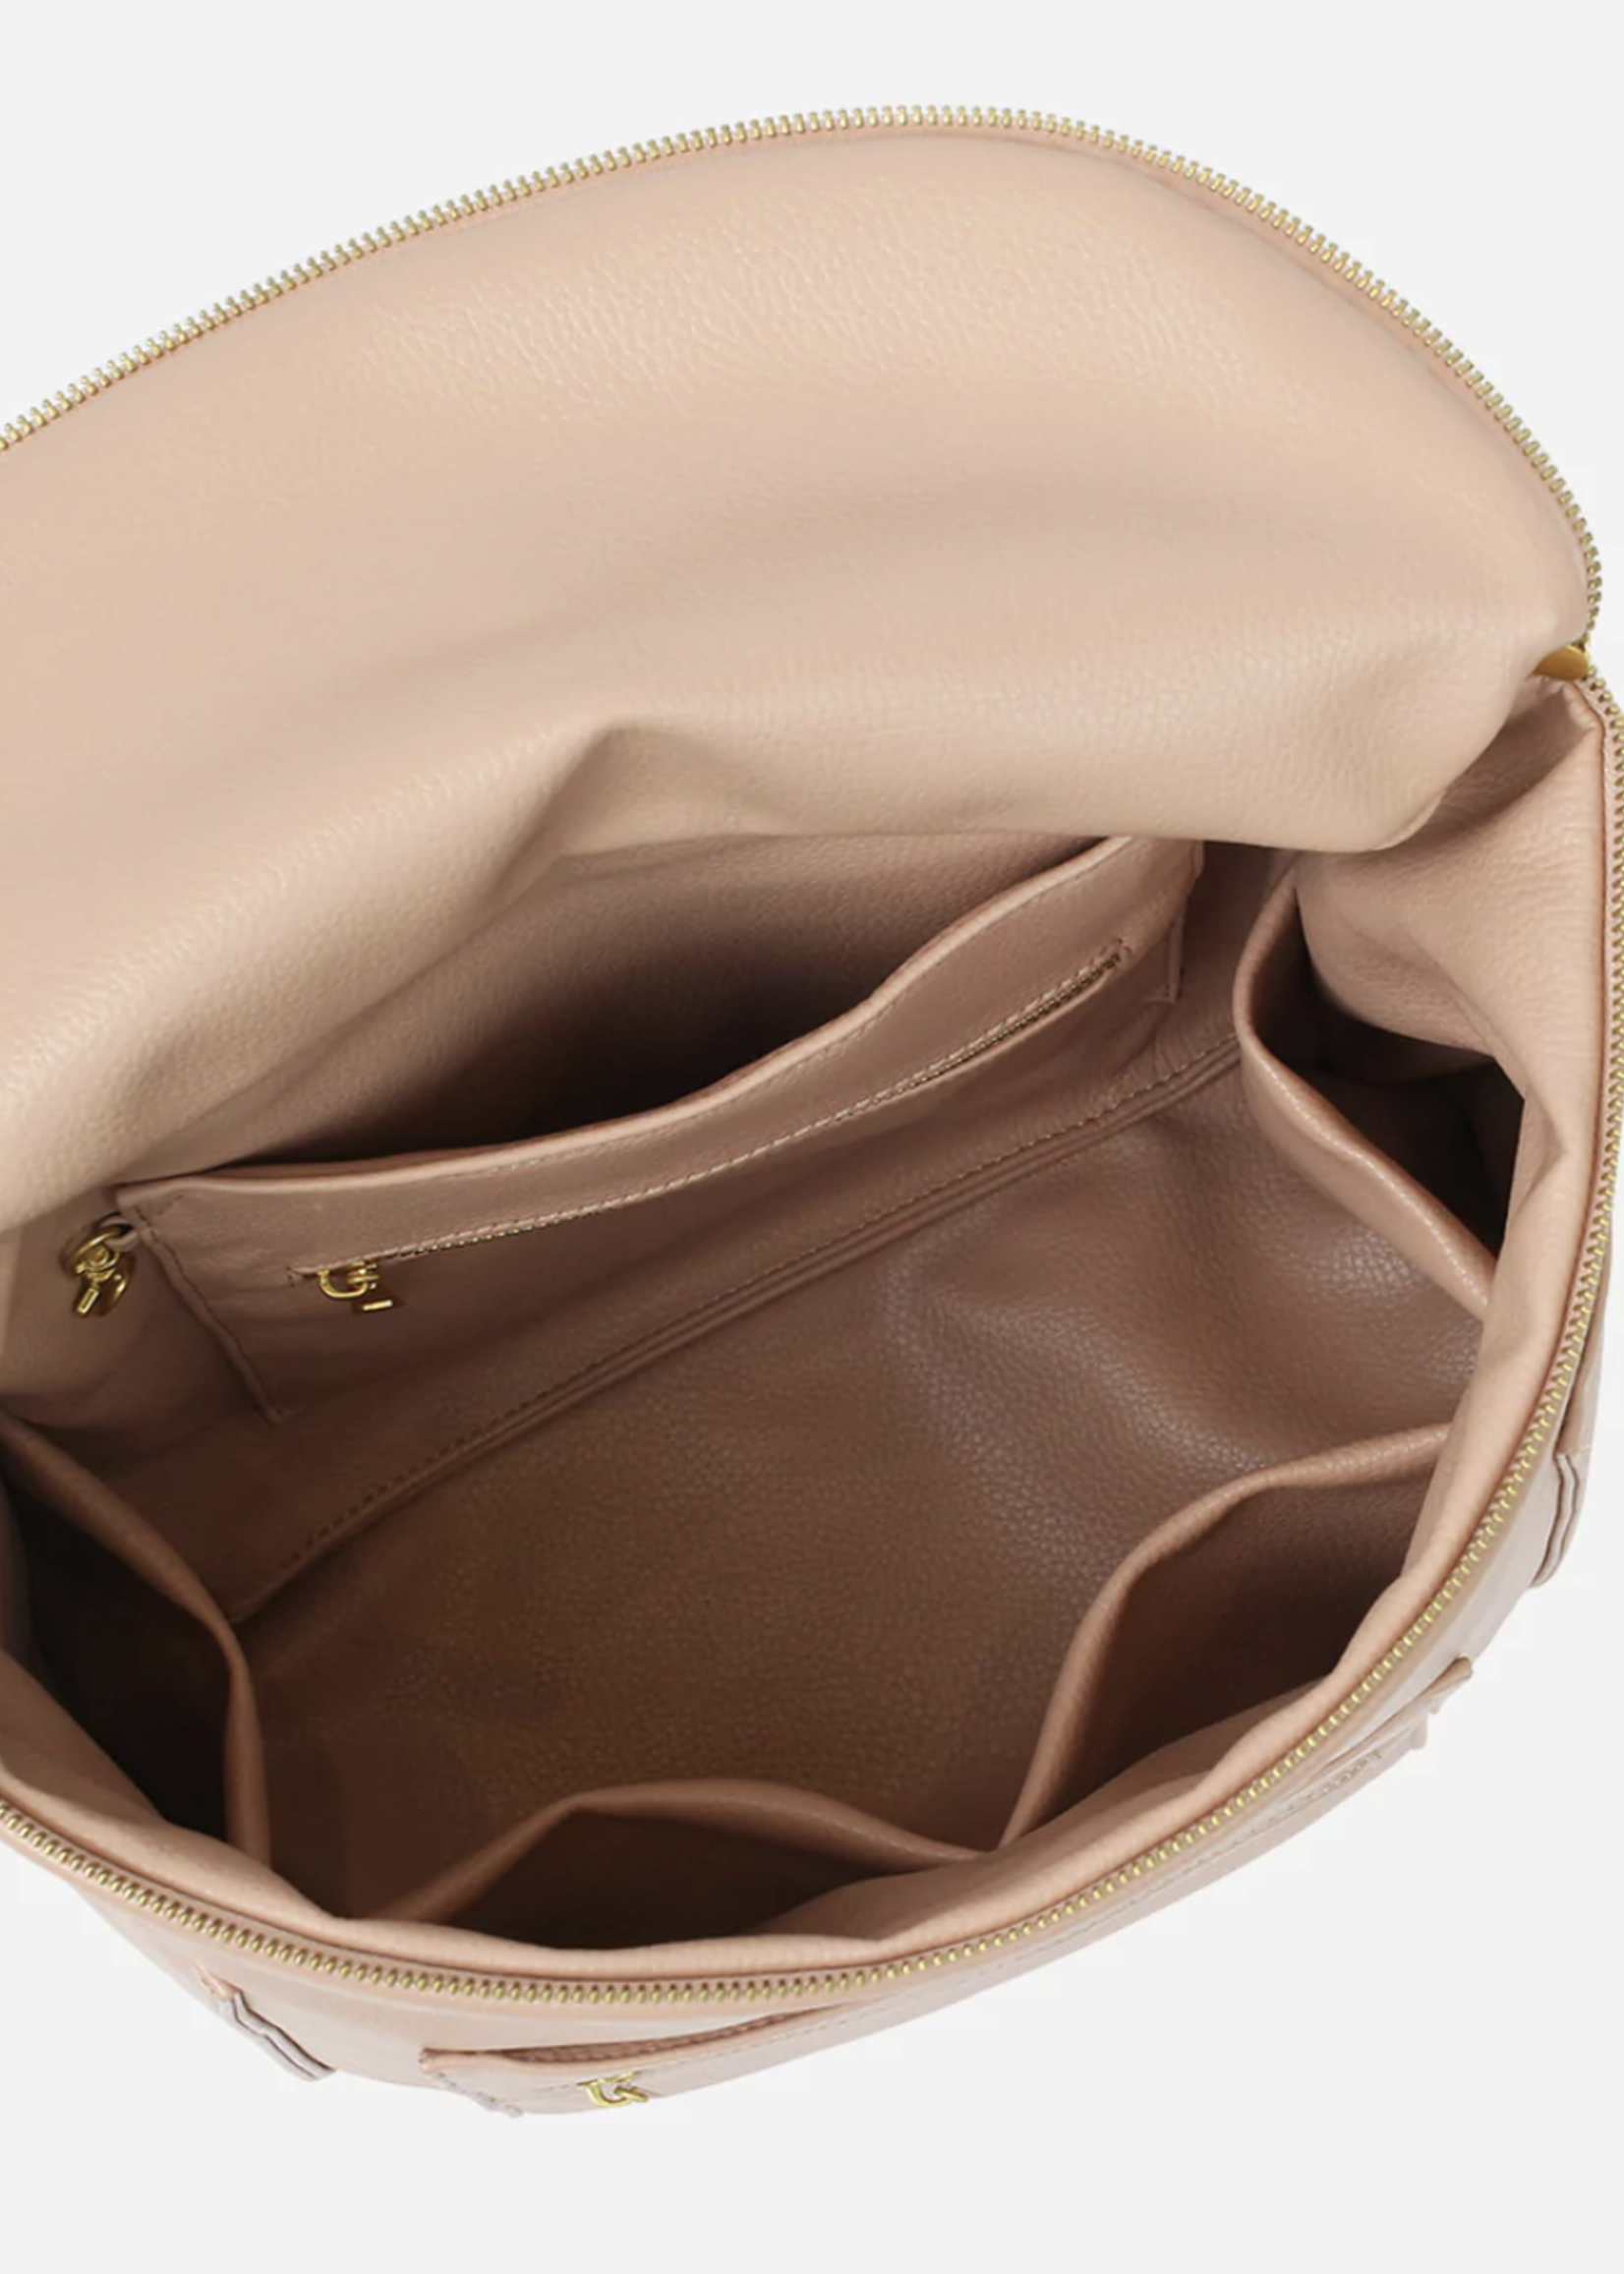 Elitaire Petite The Original Diaper Bag in Warm Blush